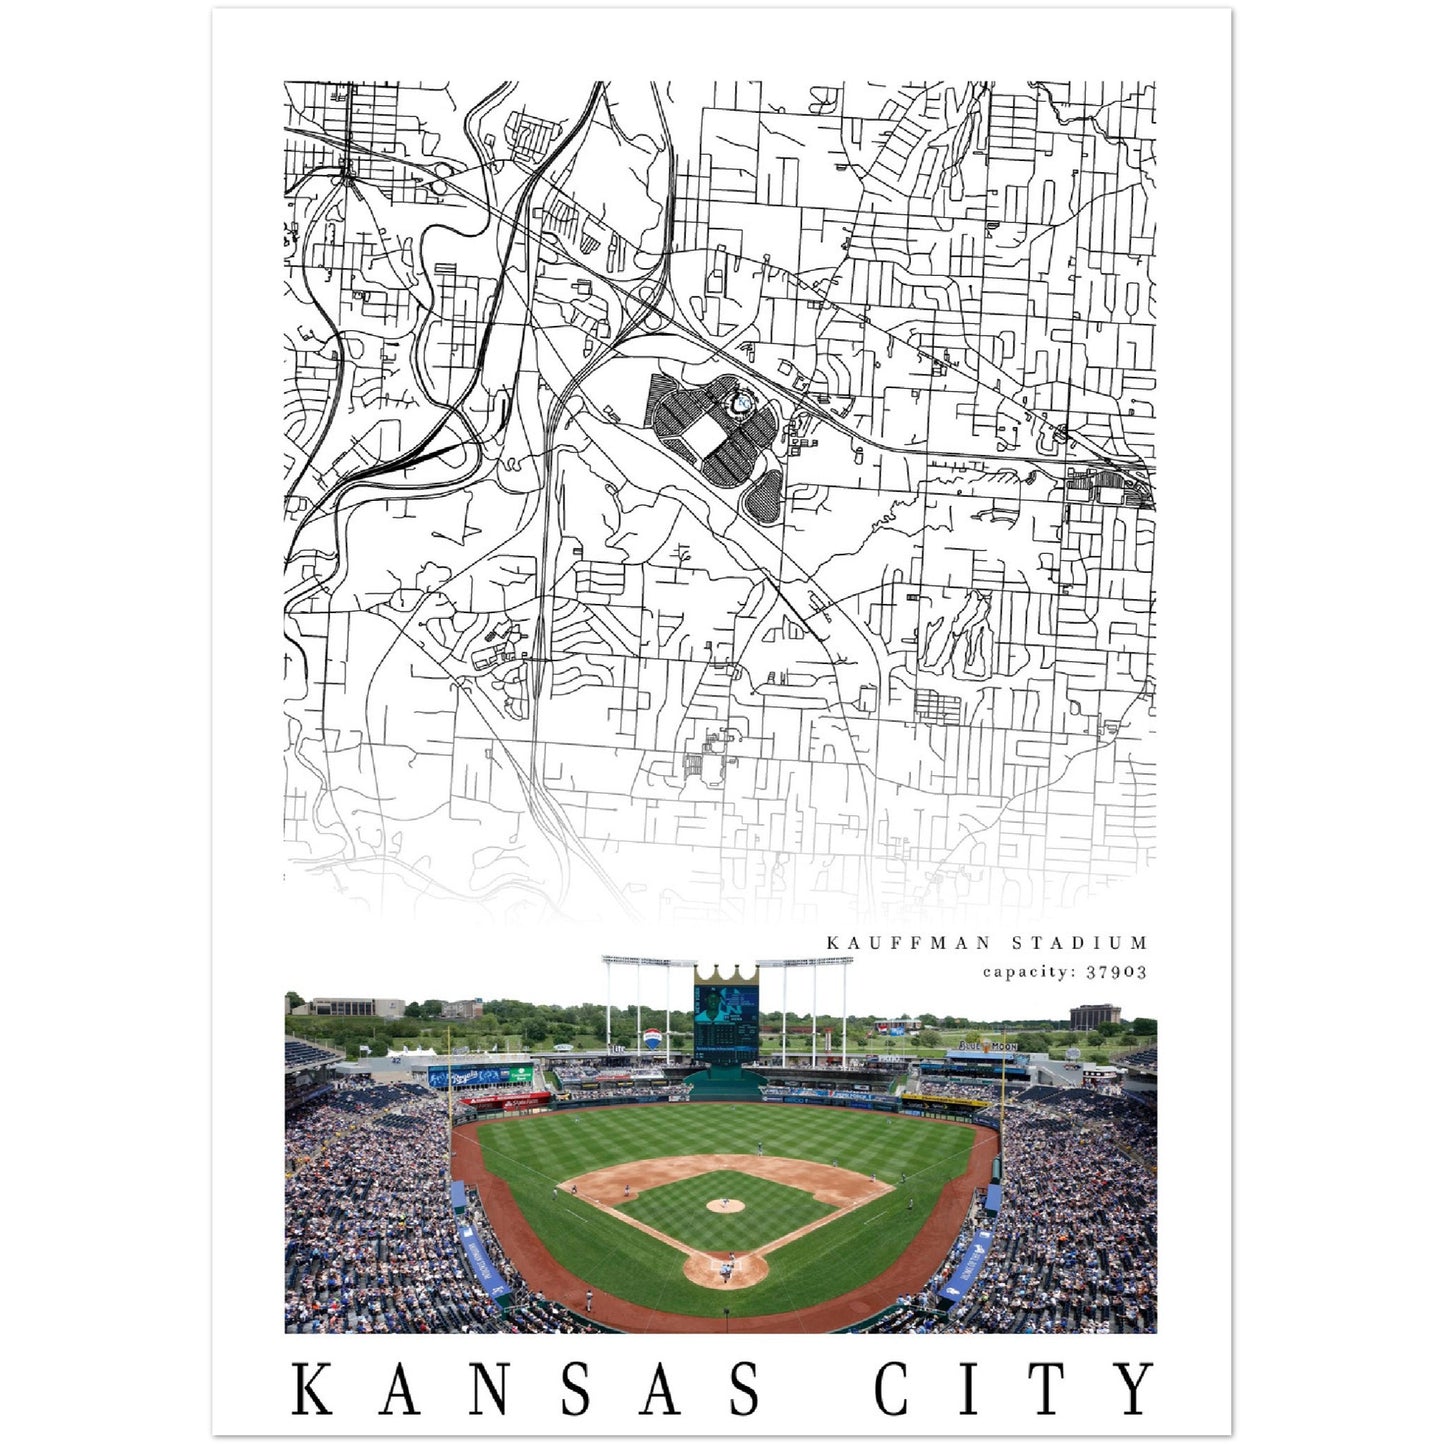 City map of Kansas City - Kauffman Stadium